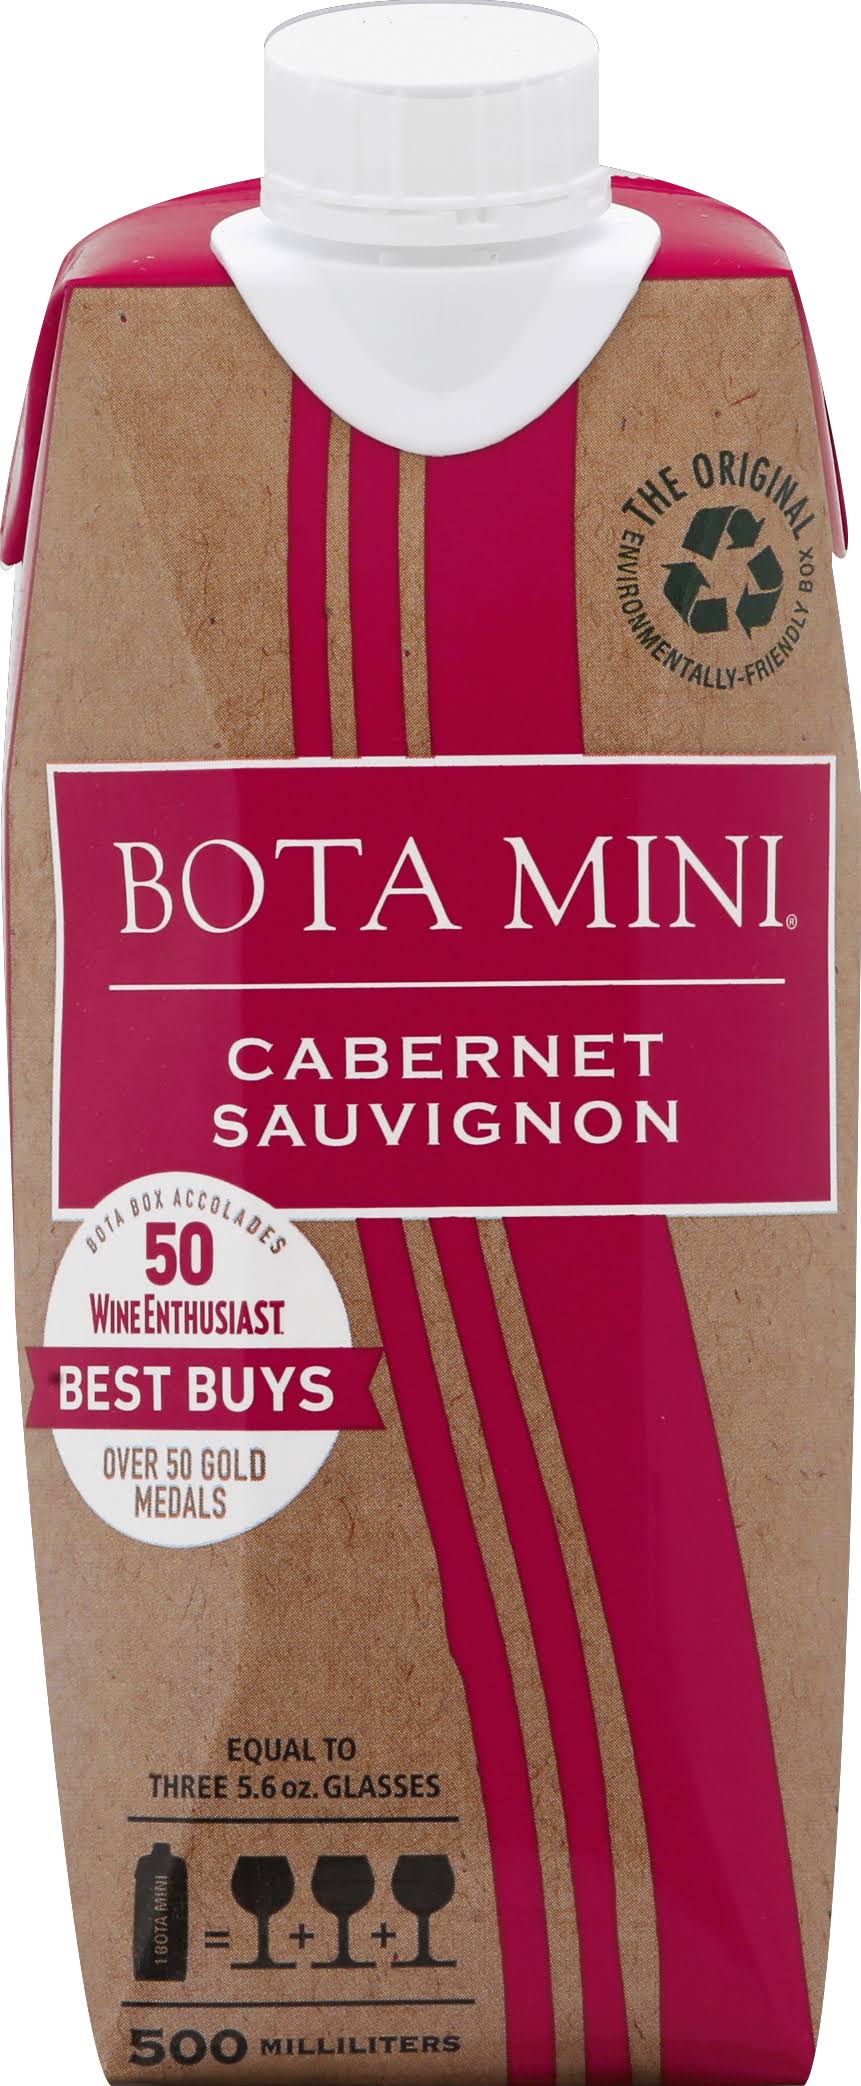 Bota Box Cabernet Sauvignon, California - 500 milliliters